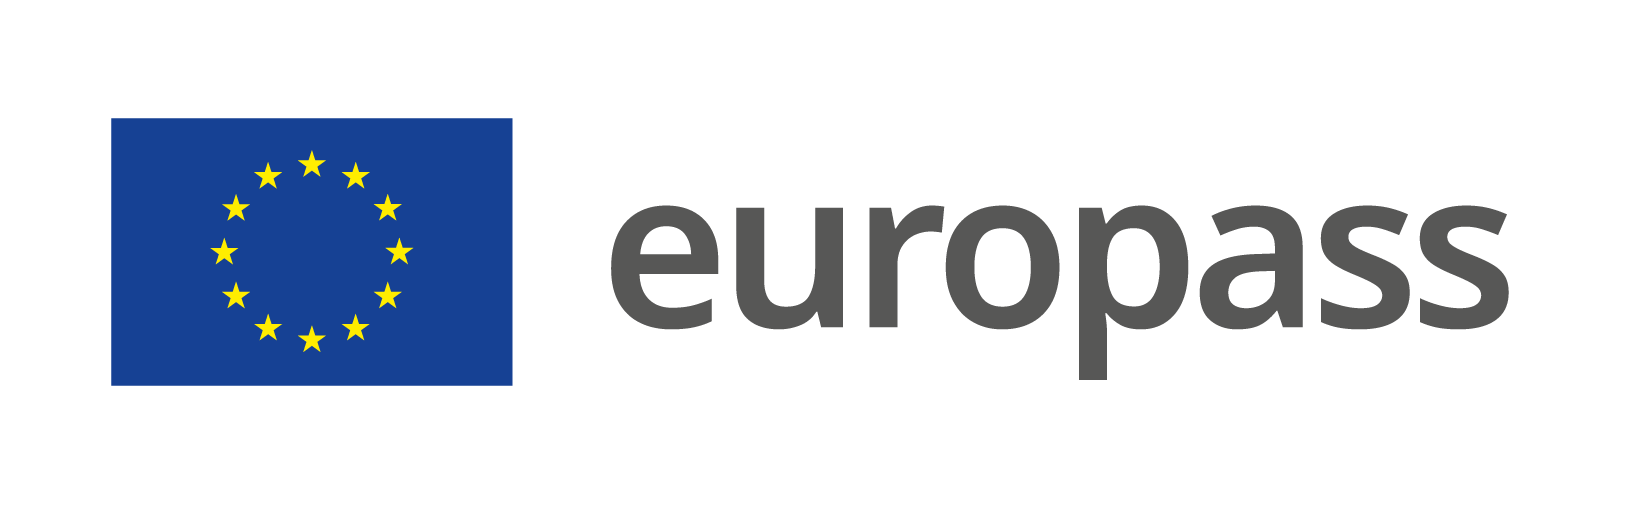 europass Logo